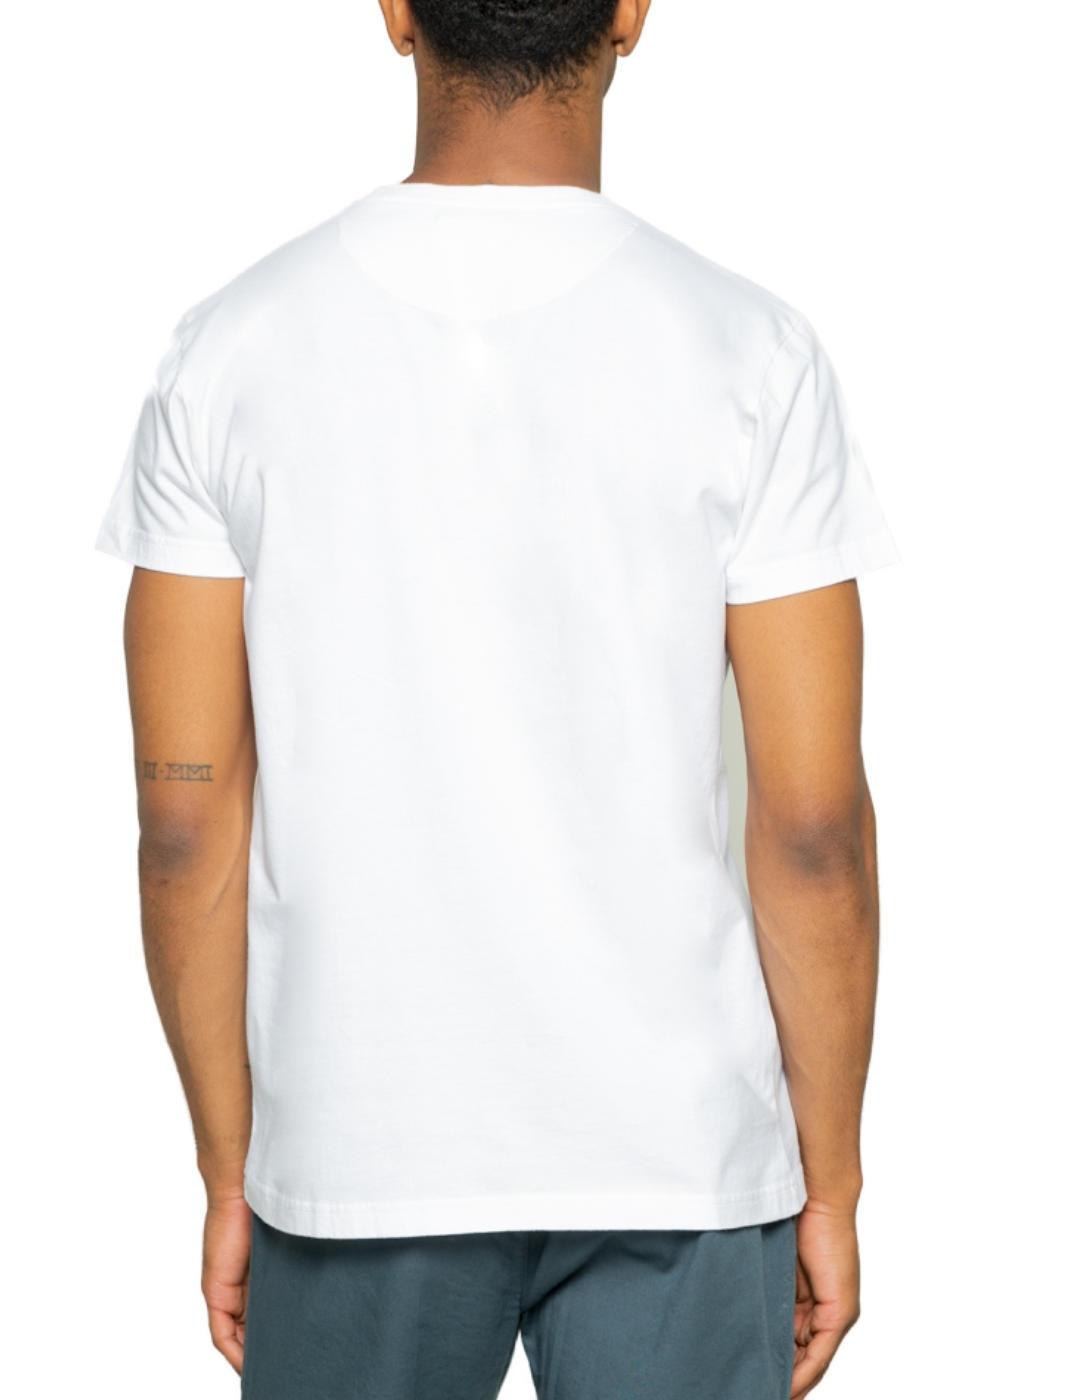 Camiseta Scotta Ranger blanca manga corta para hombre